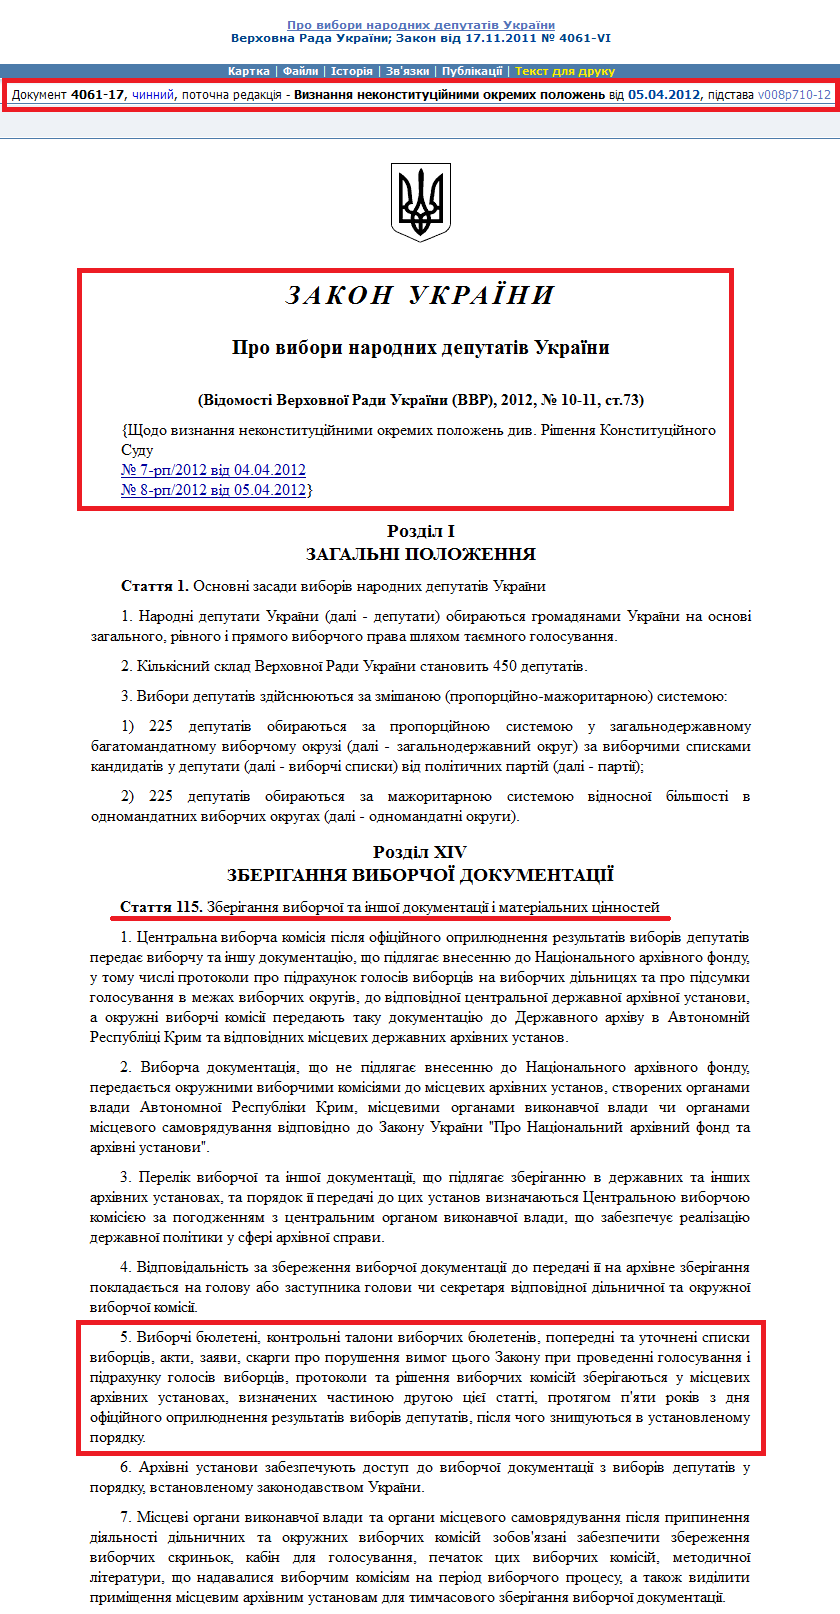 http://zakon2.rada.gov.ua/laws/show/4061-17/print1329901621588623